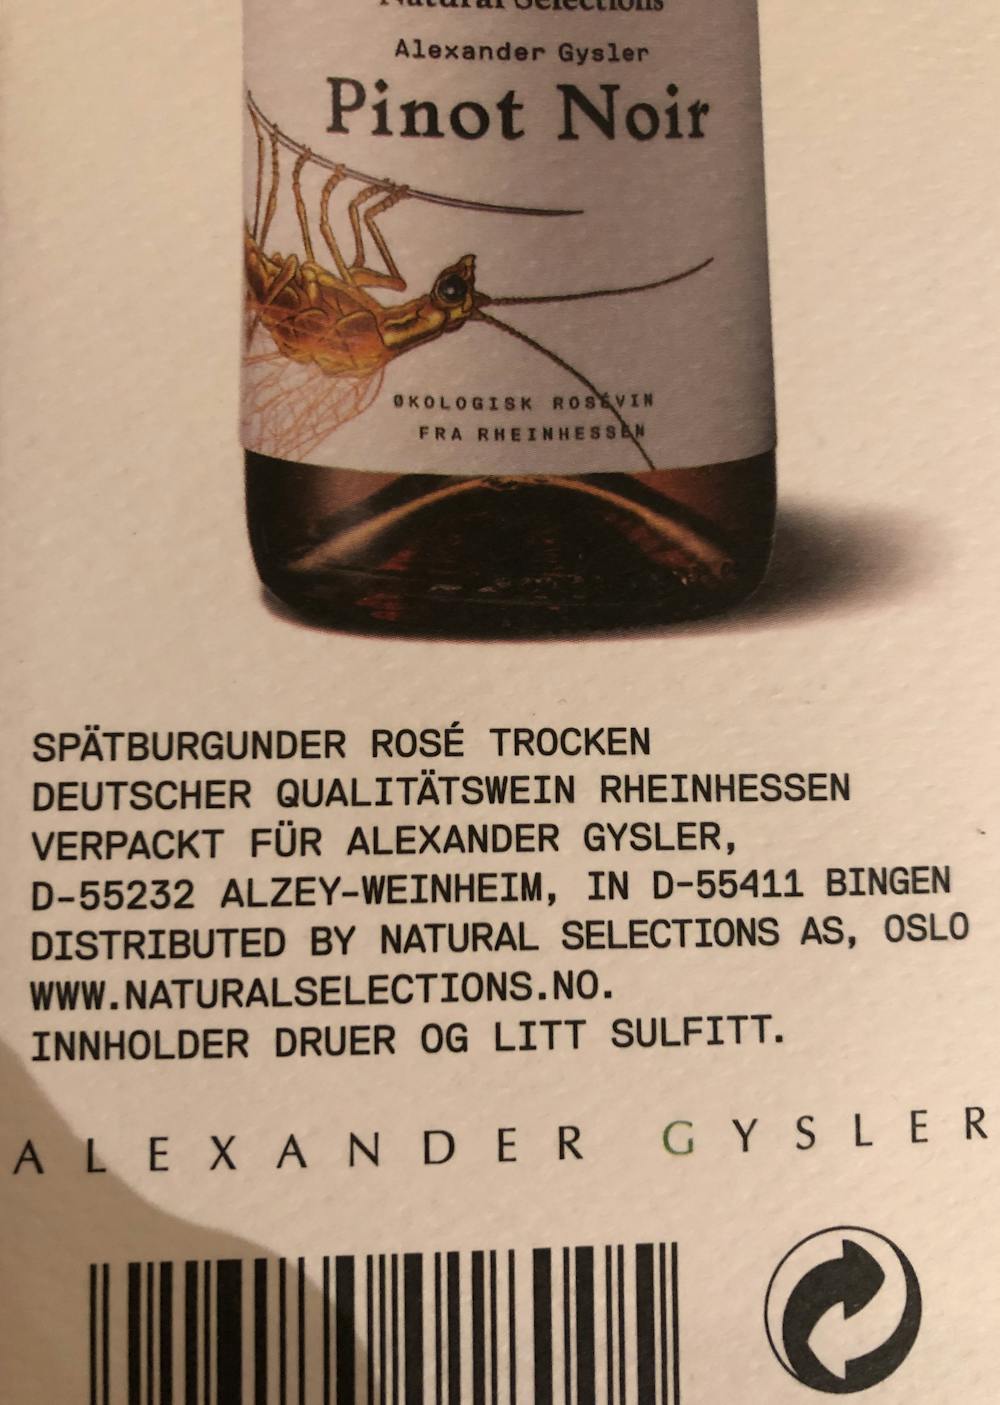 Ingredienslisten til Alexander Gysler Pinot Noir Rosè